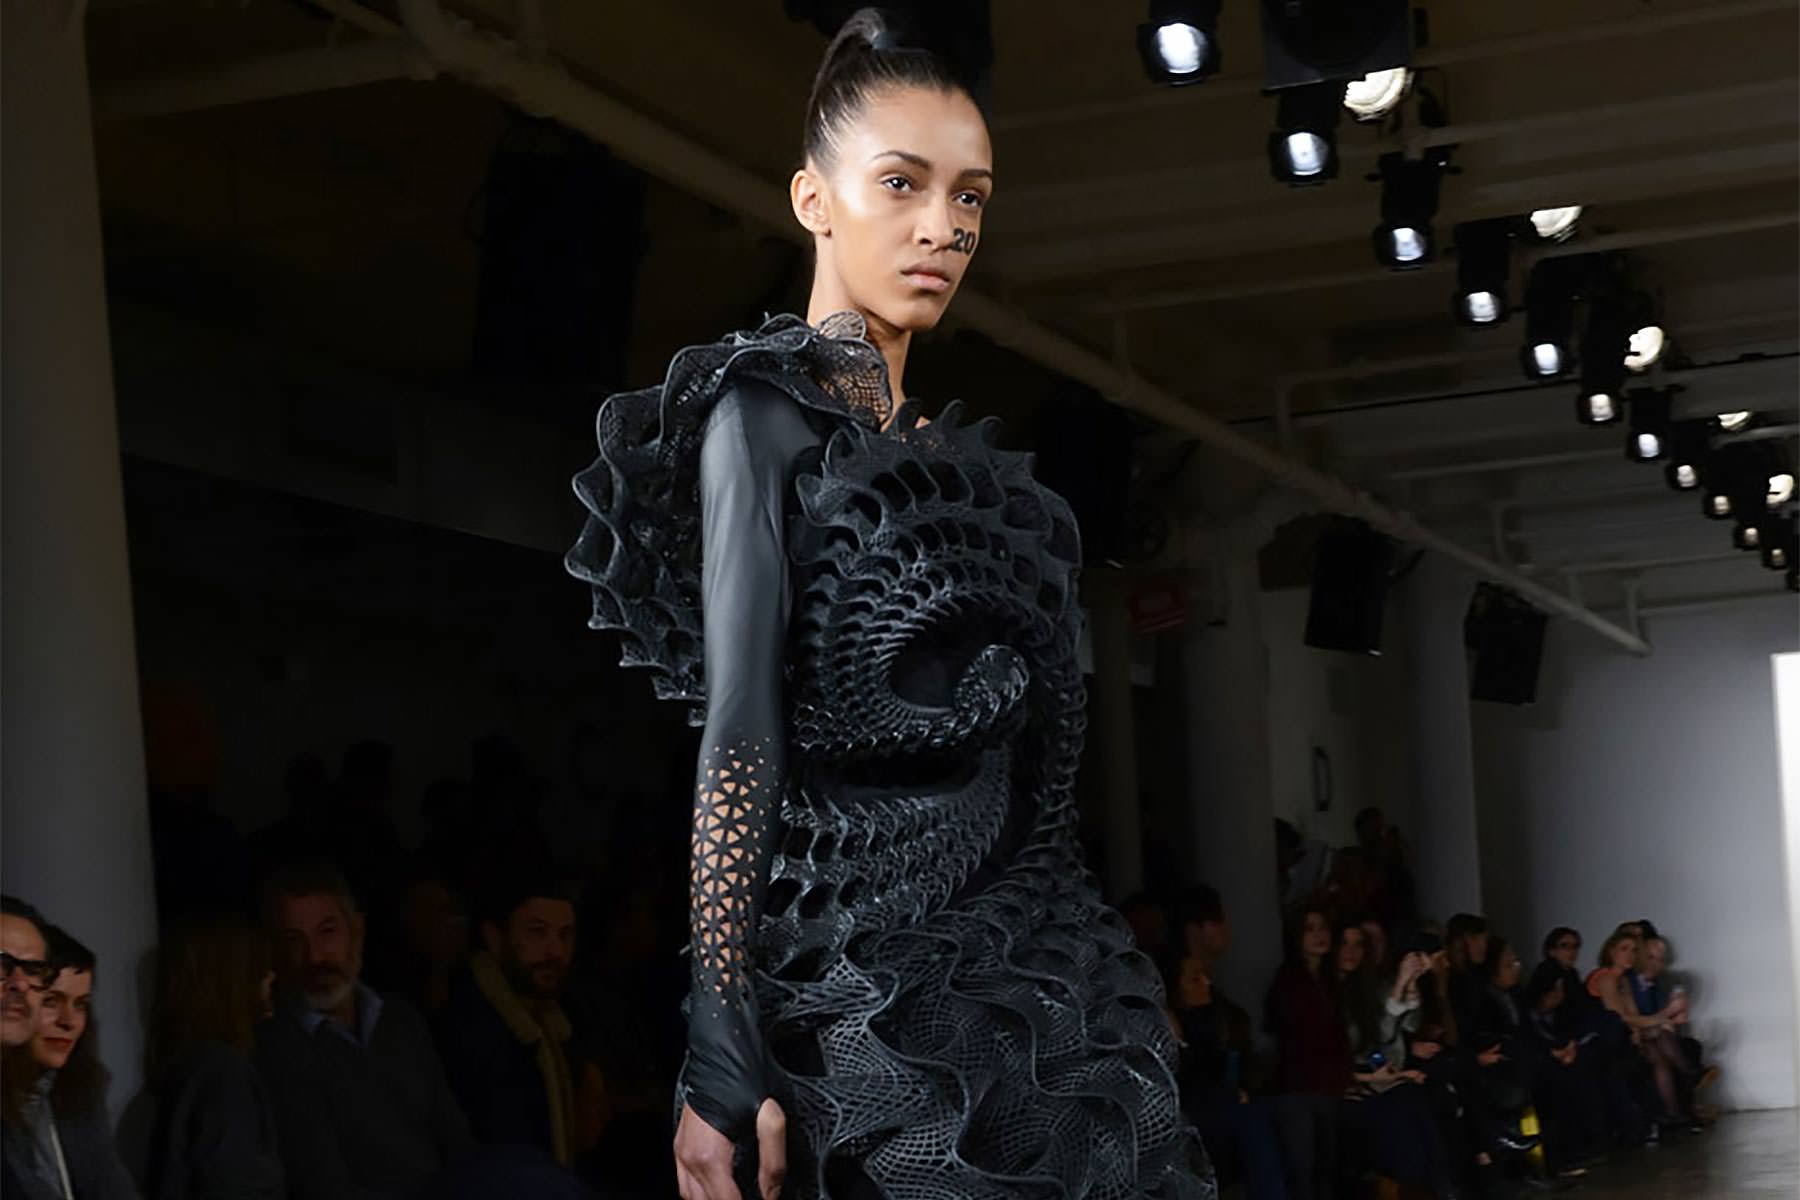 What 3D Printing Means For Fashion|3d-printing-fashion-harmonograph-dress|3D printer fashion Pangolin dress